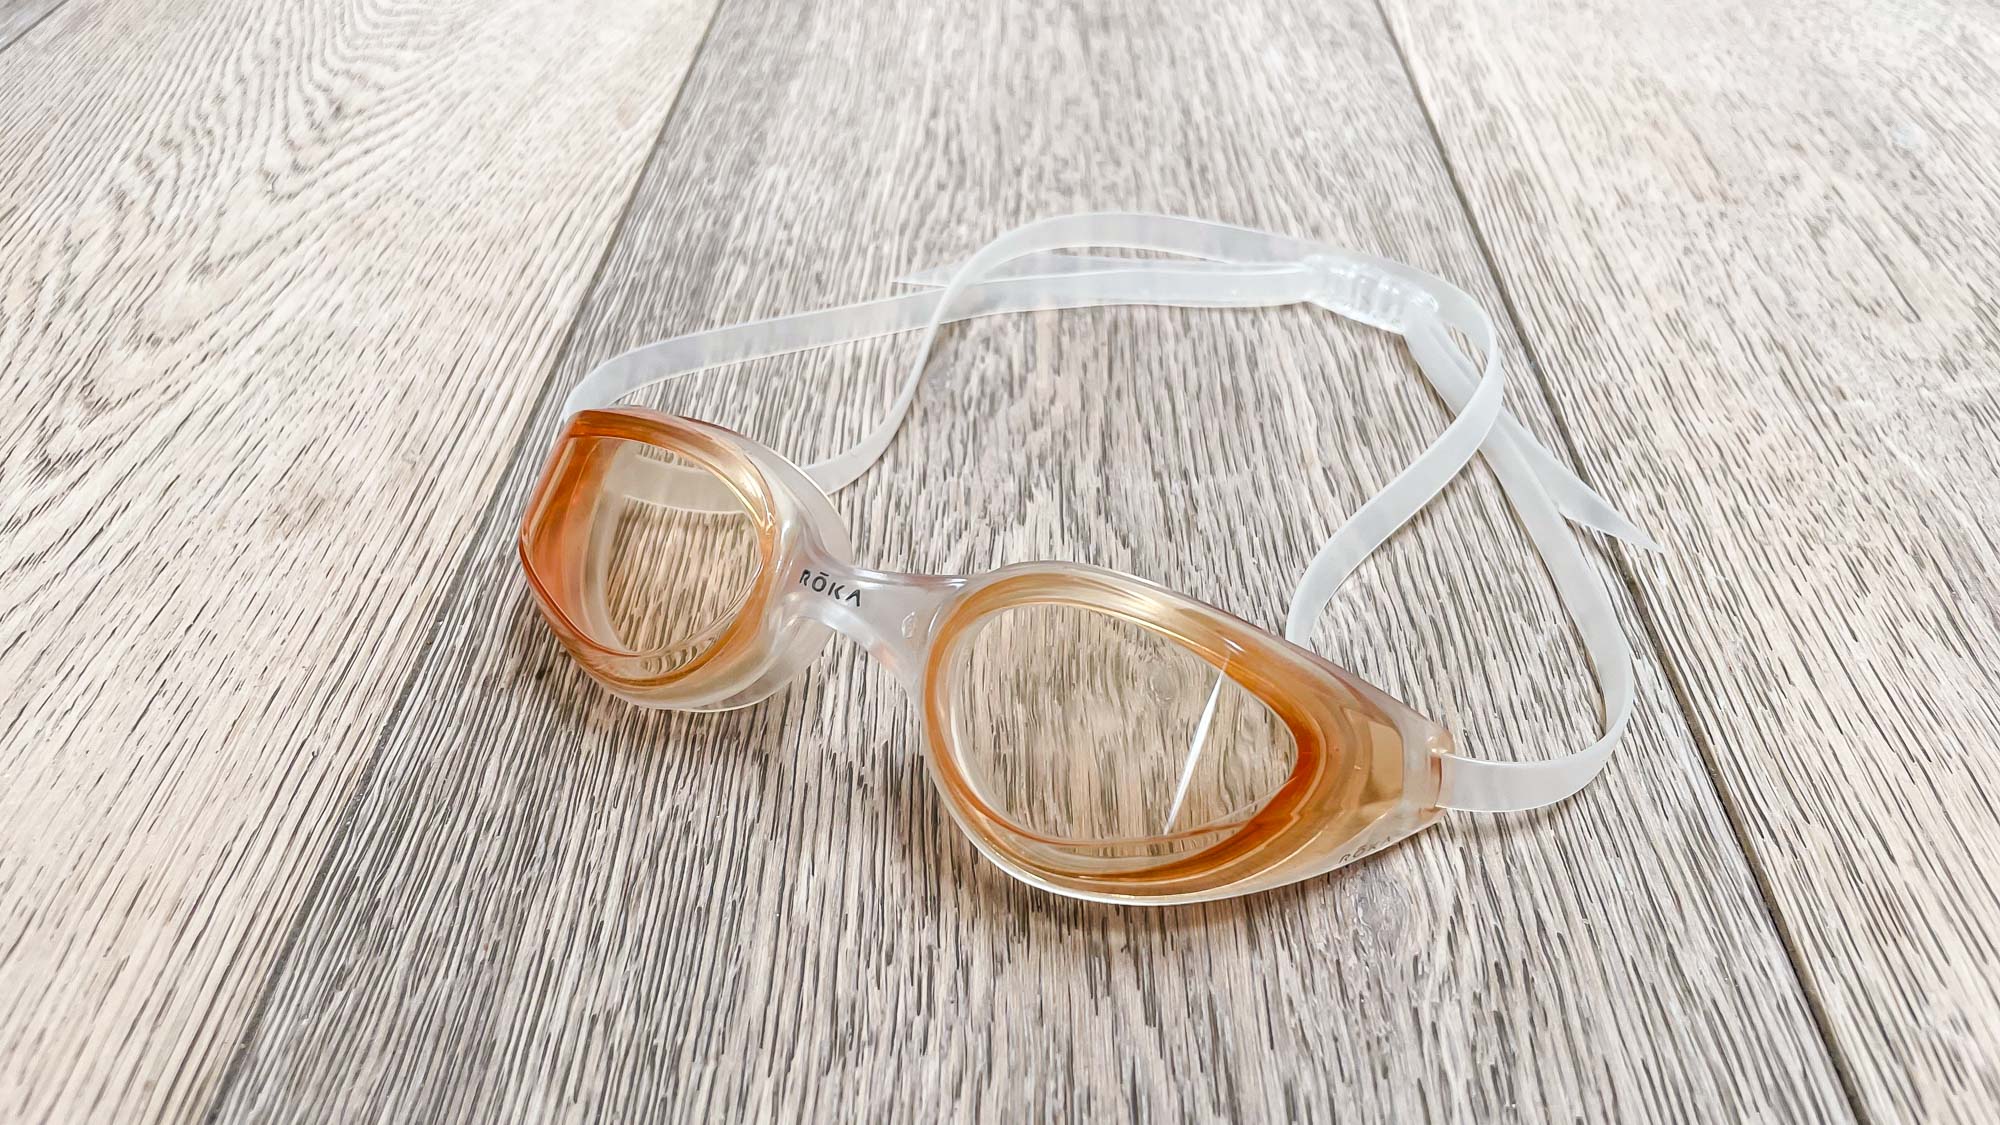 Best swimming goggles: ROKA R1 goggle